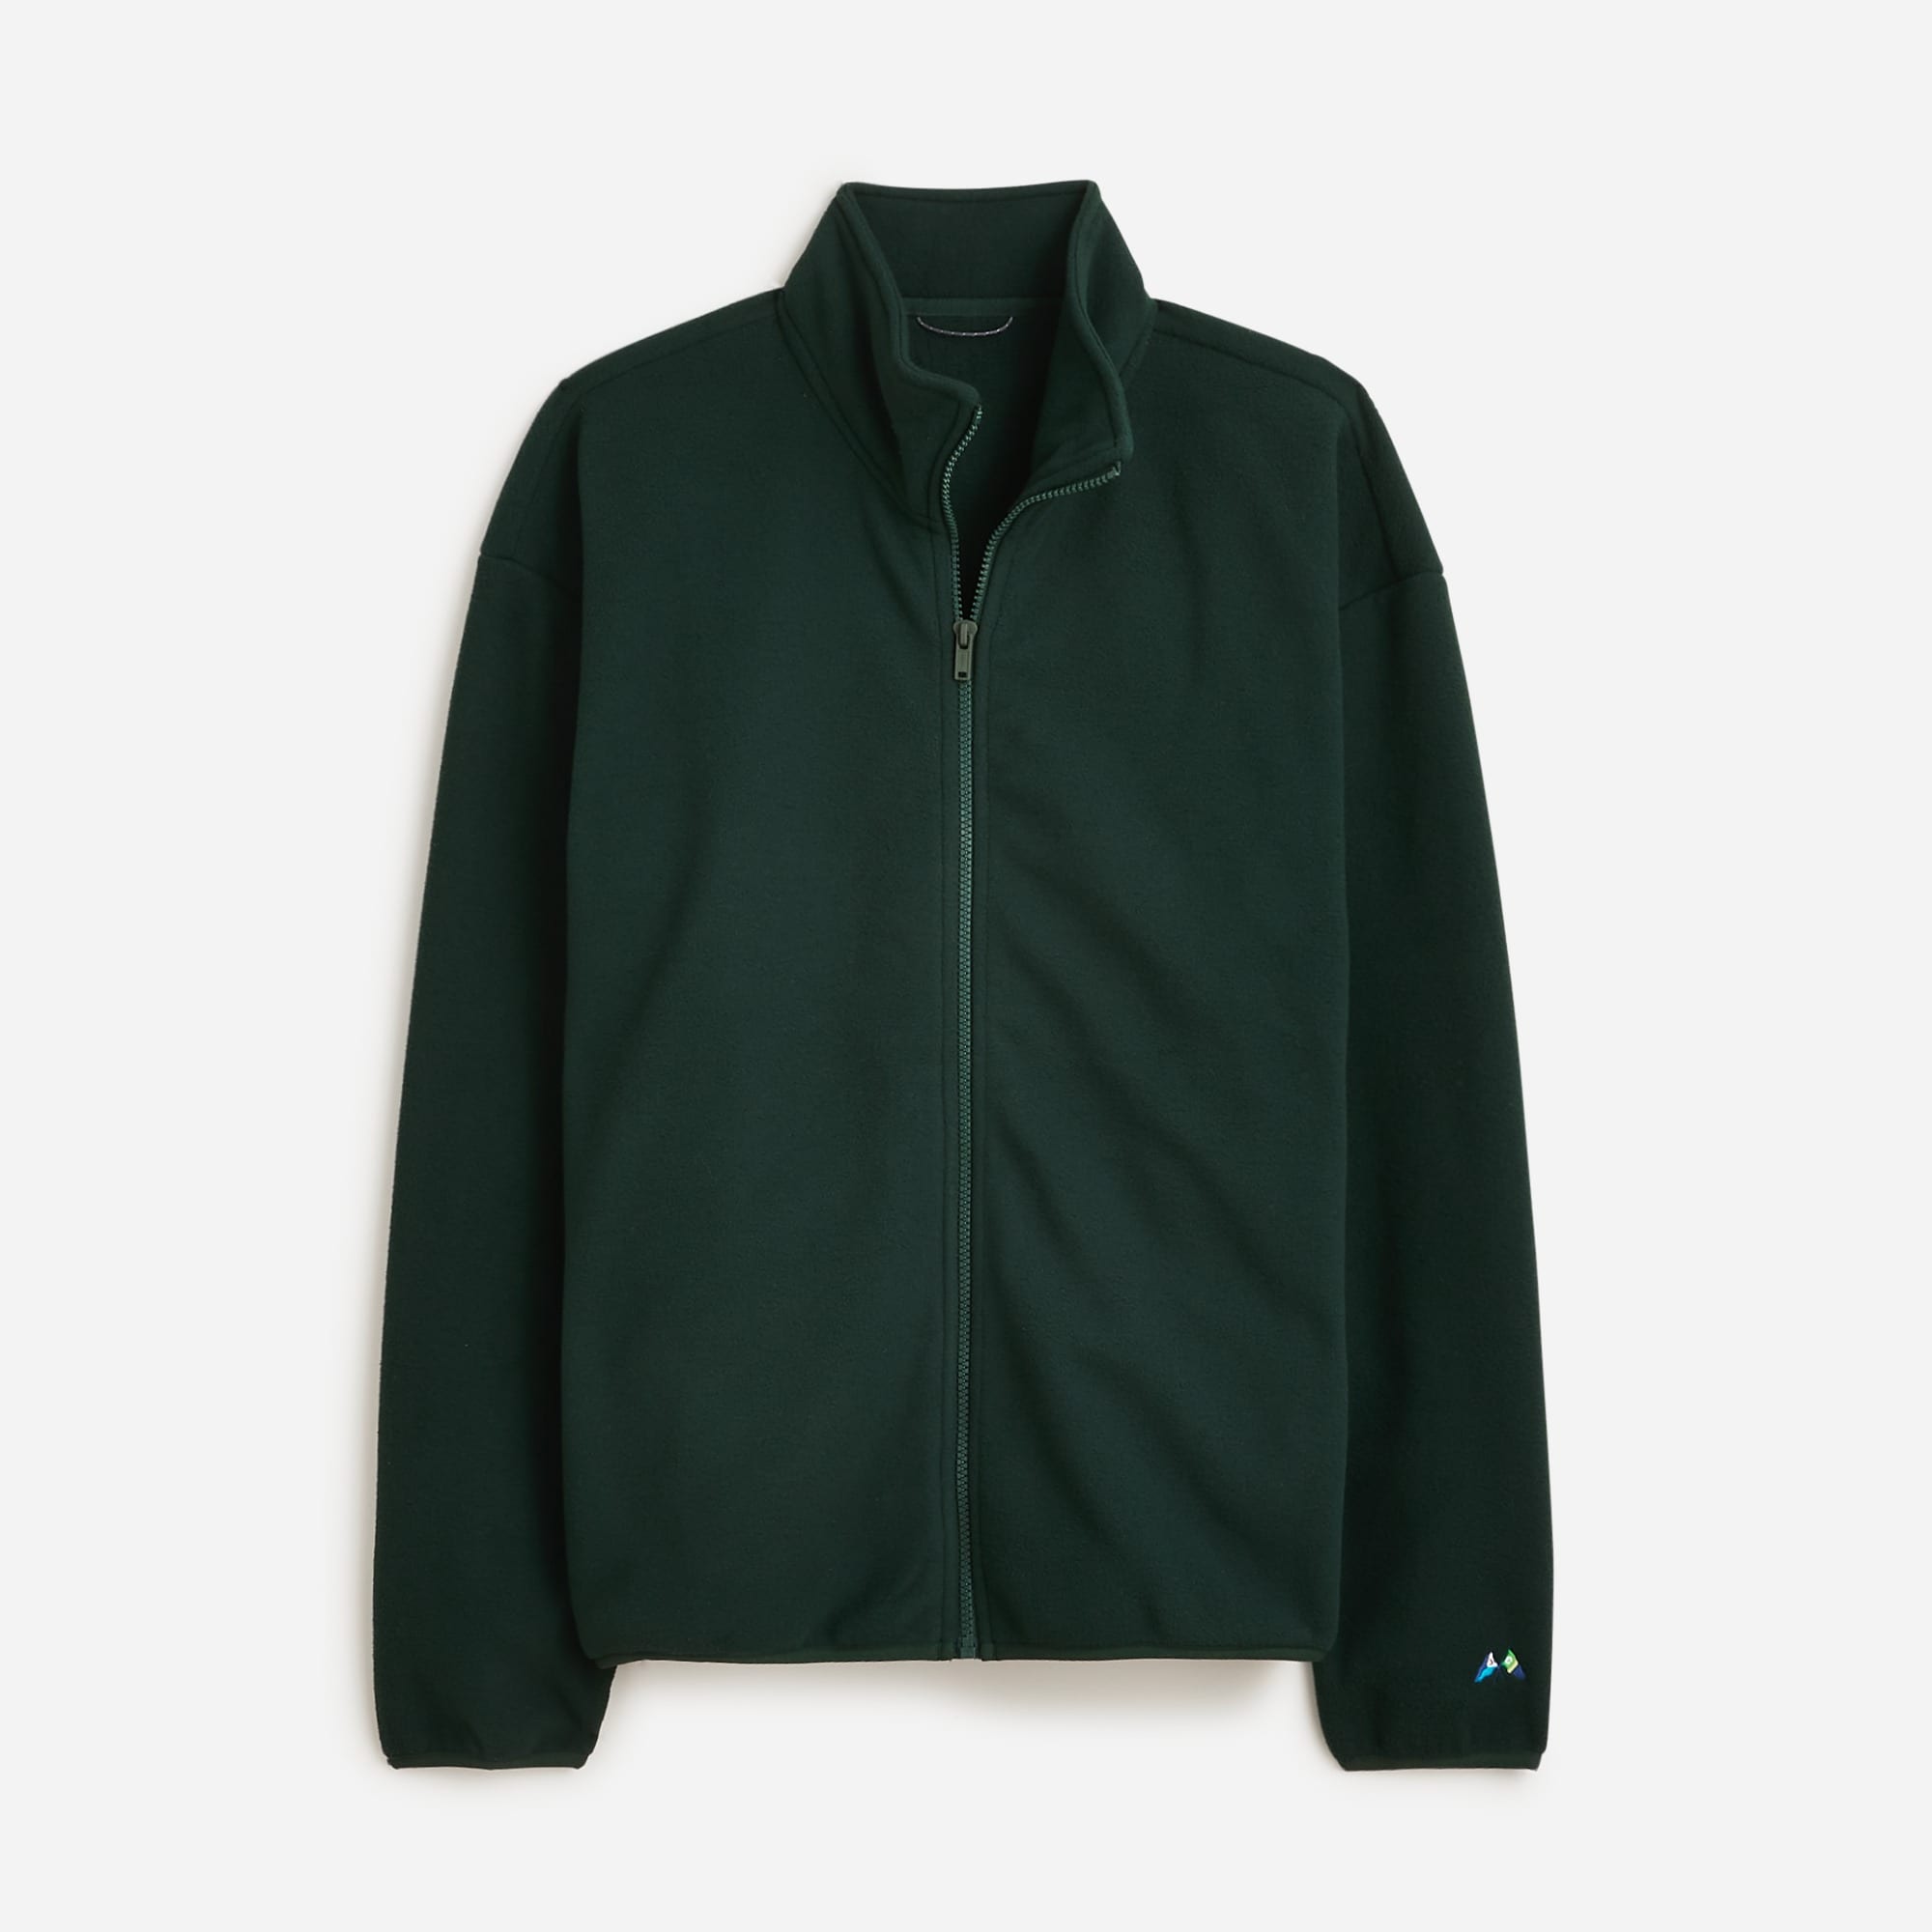  Full-zip recycled-fleece jacket